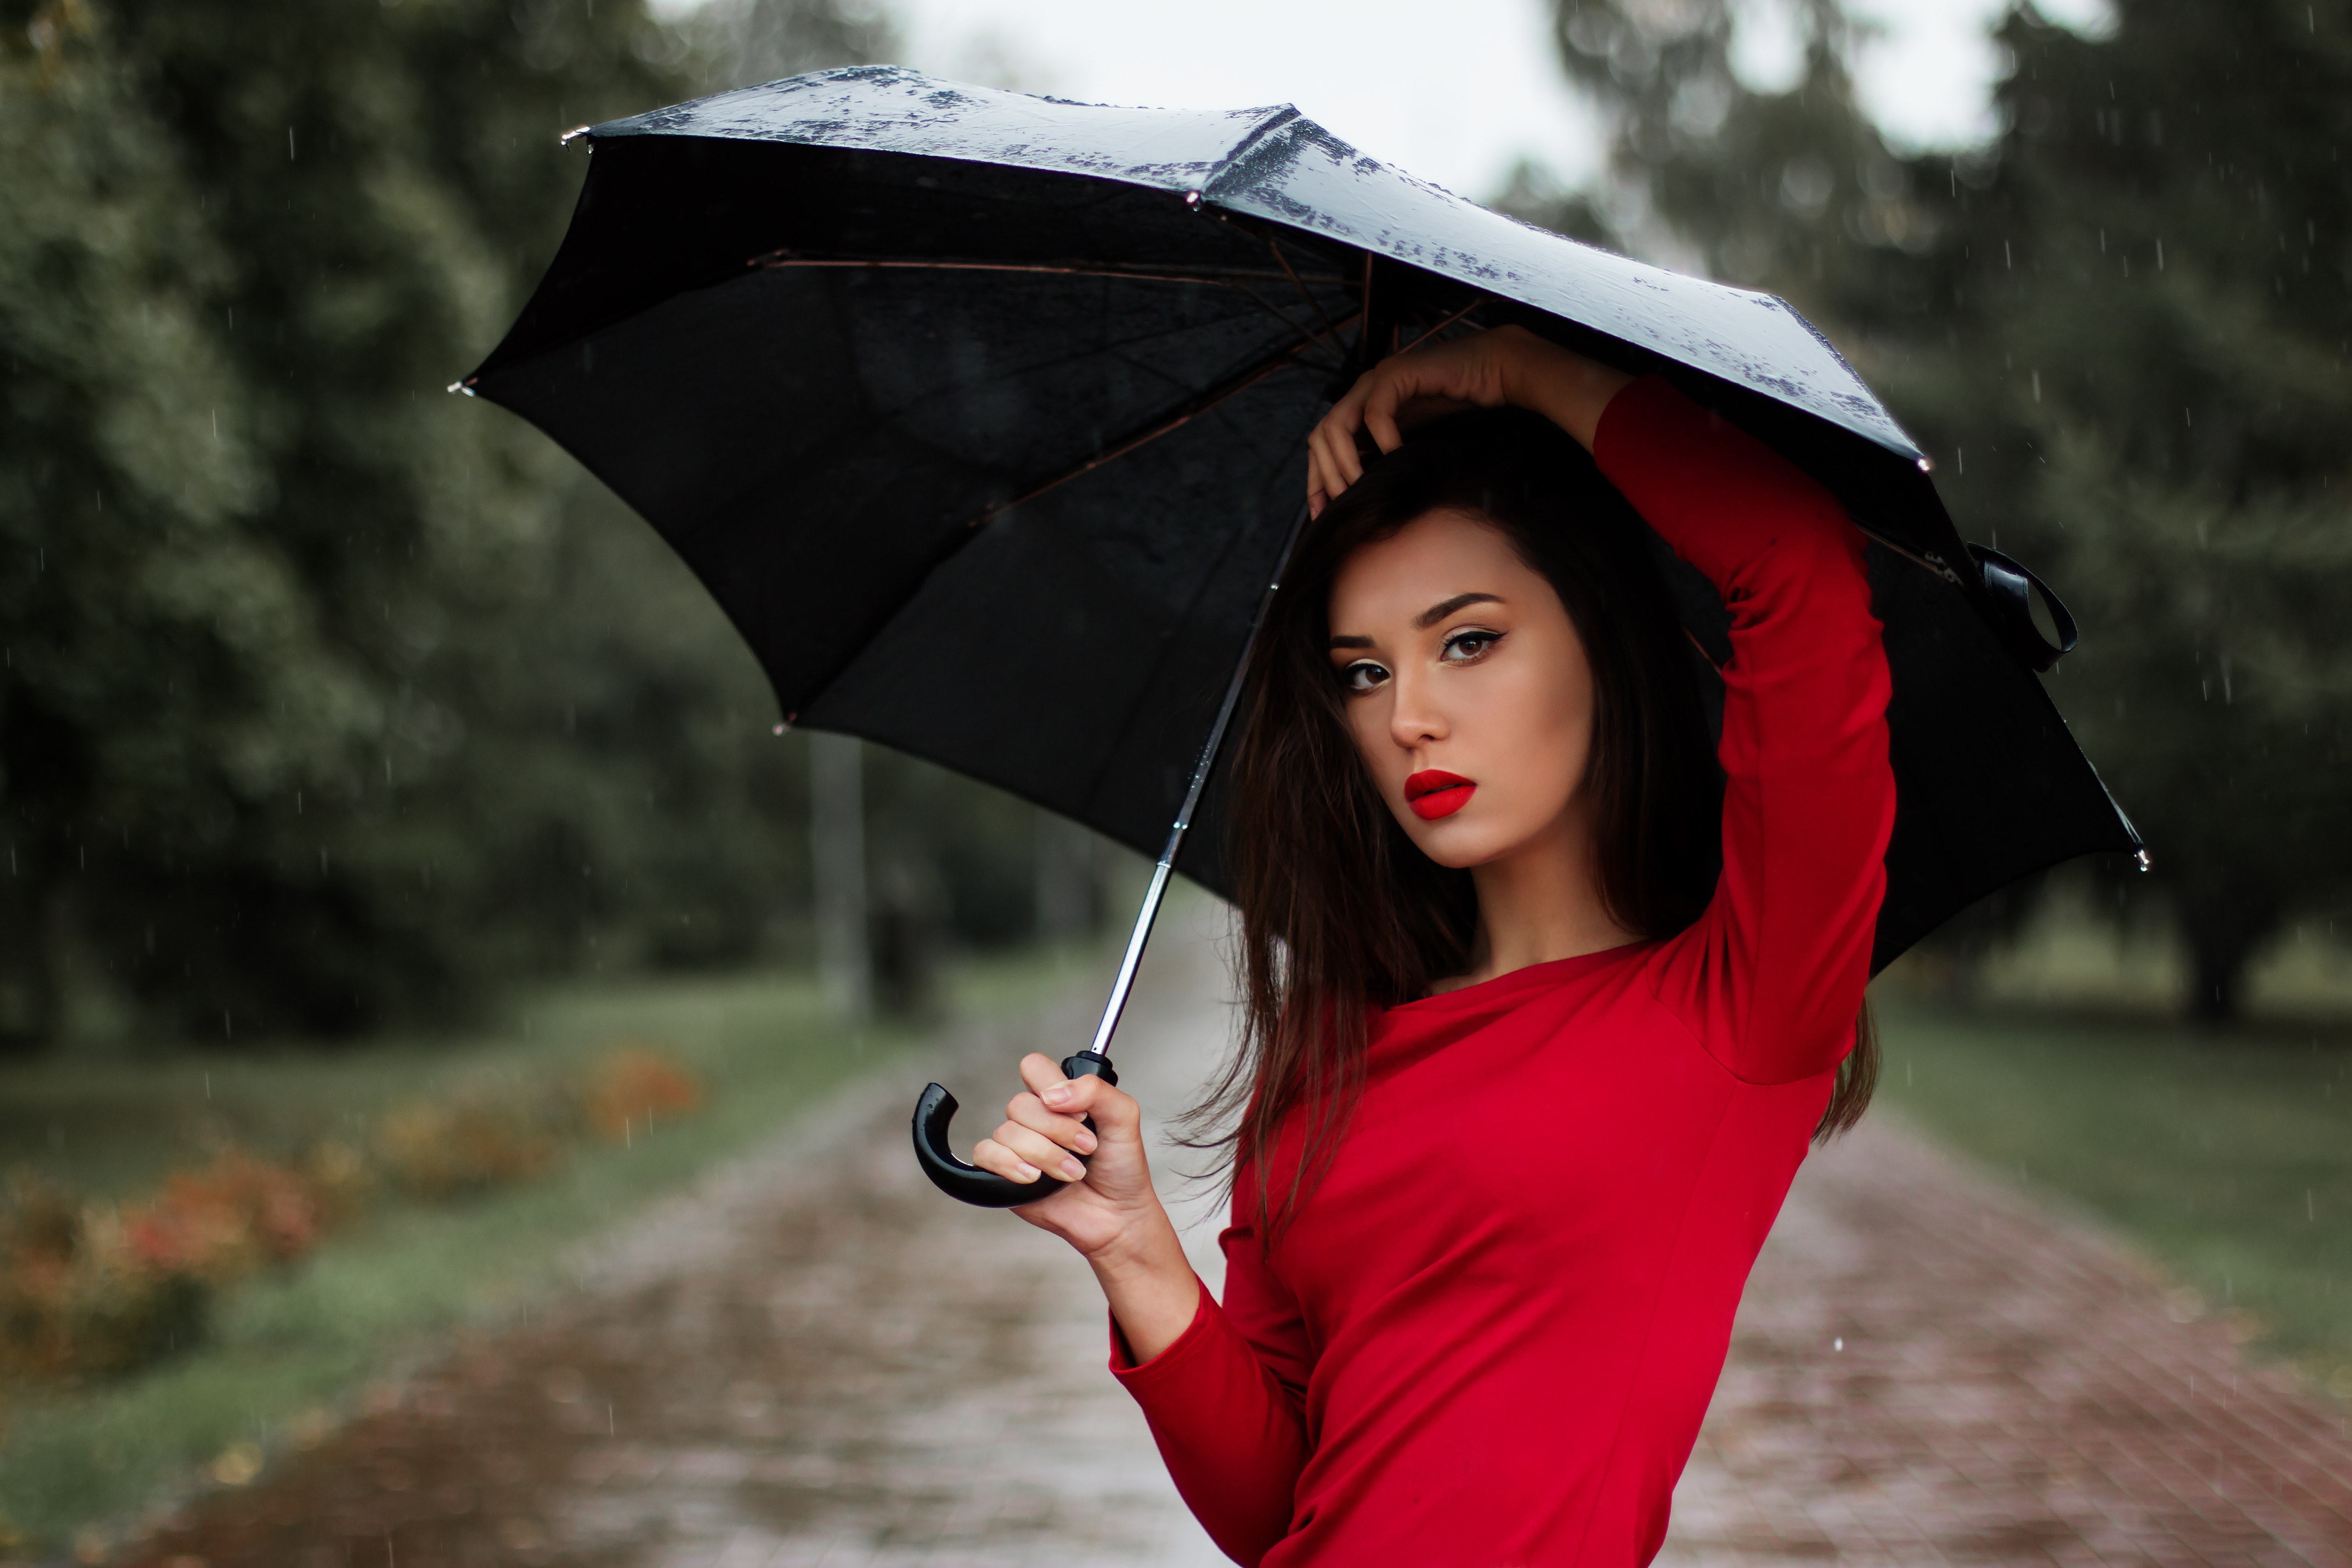 Beauty with Umbrella